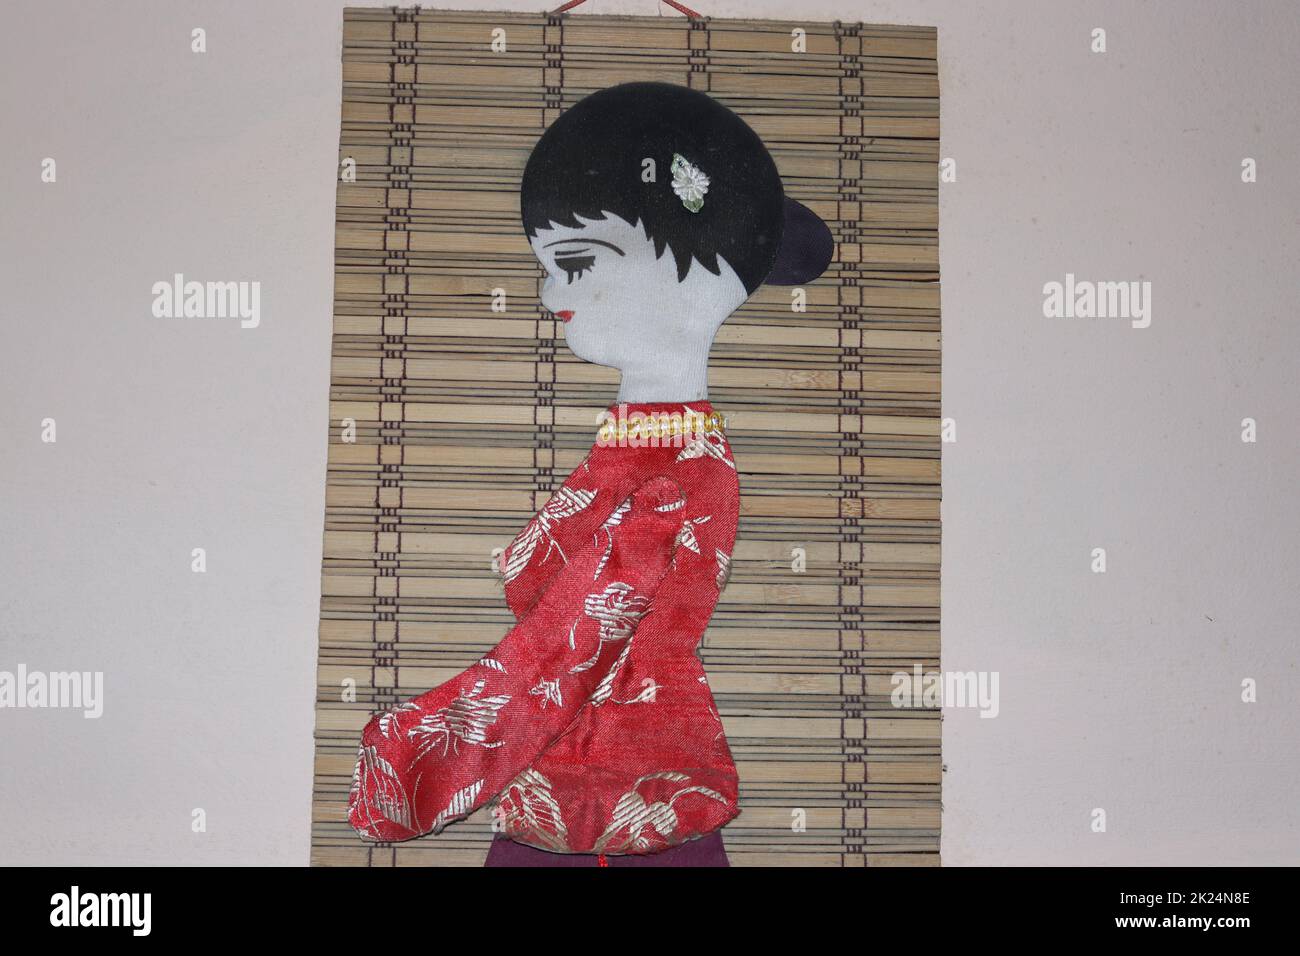 Artwork of an japan geisha found on a wall Stock Photo